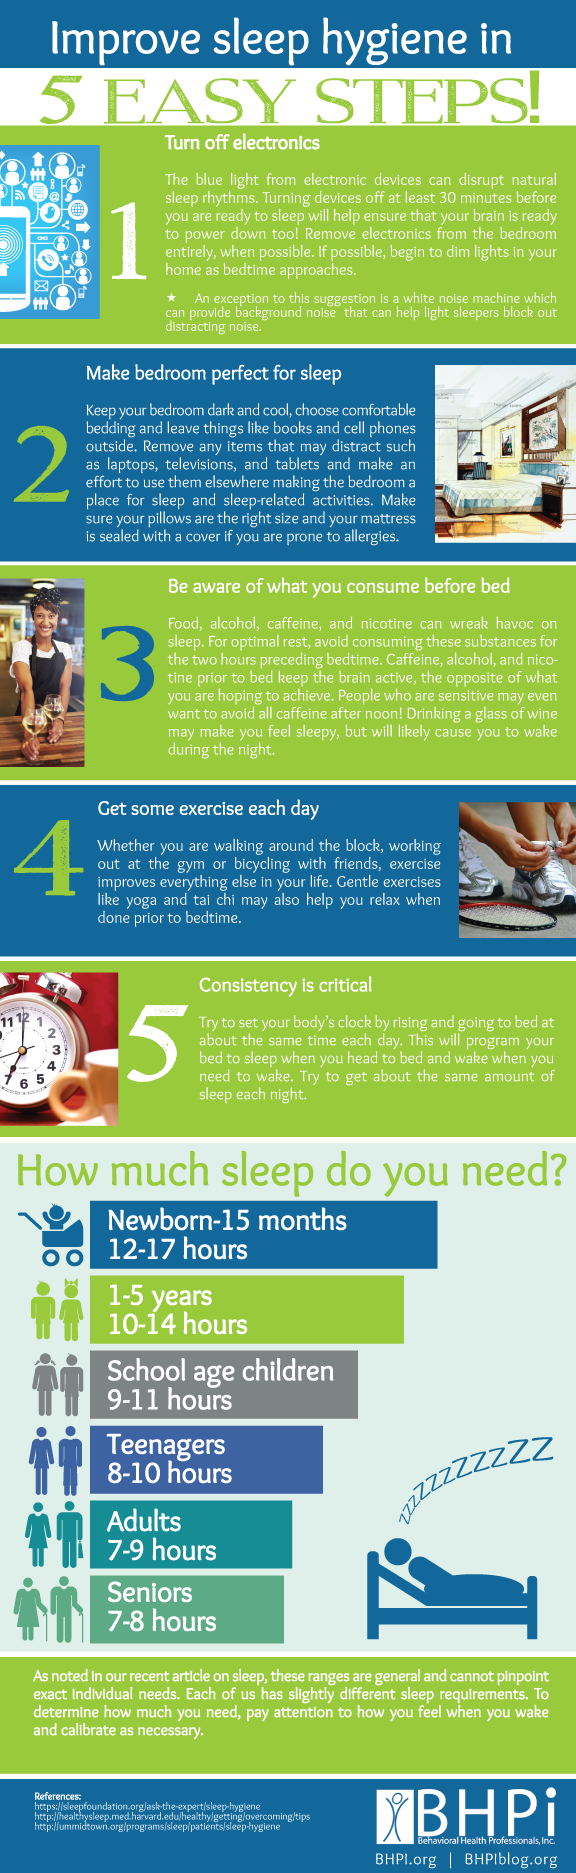 Sleep-Hygiene-Infographic